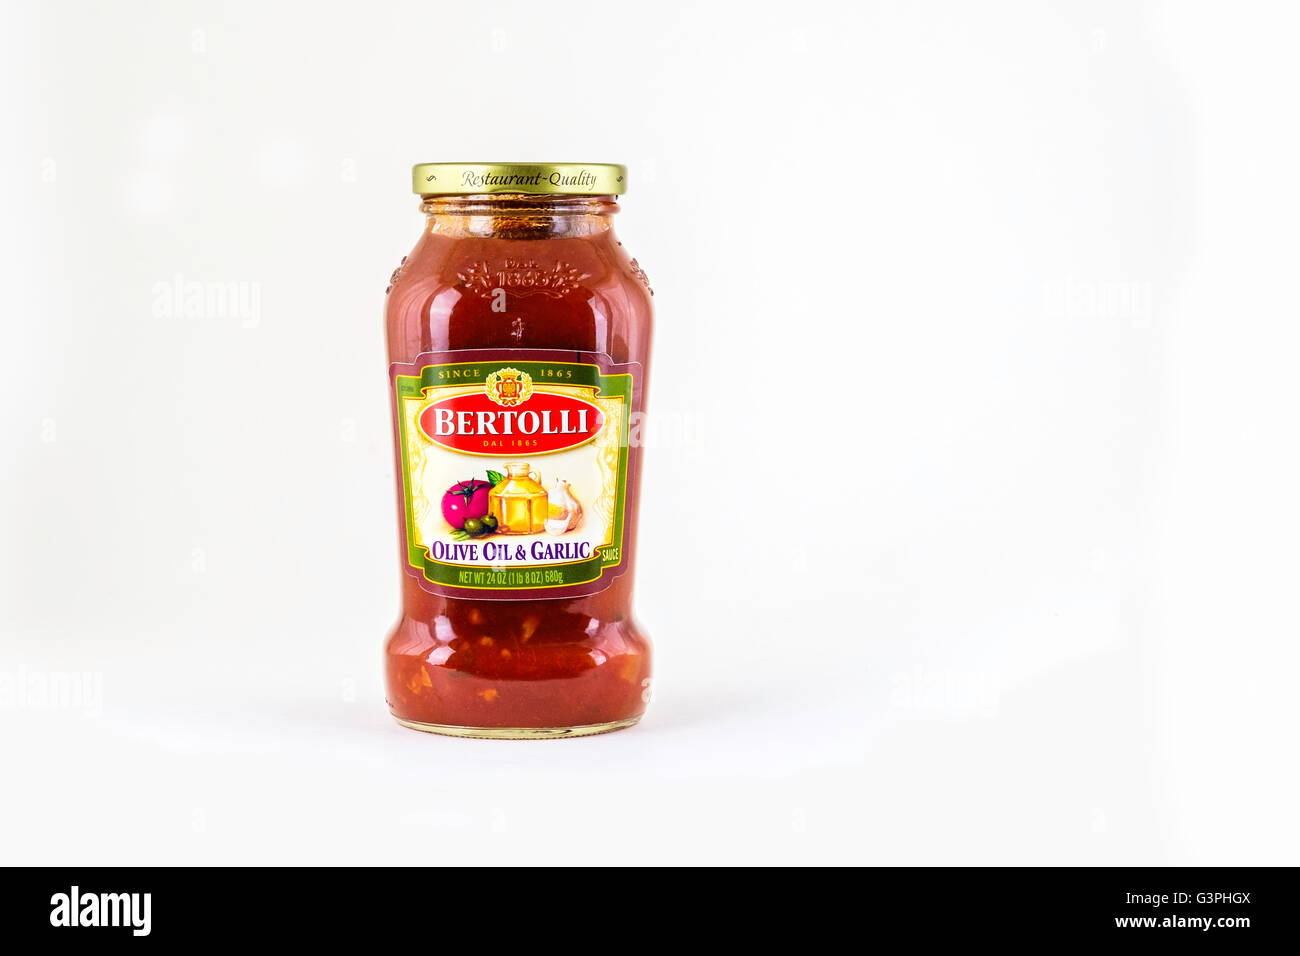 A glass jar of Bertolli brand olive oil & garlic flavored pasta sauce. USA. Stock Photo